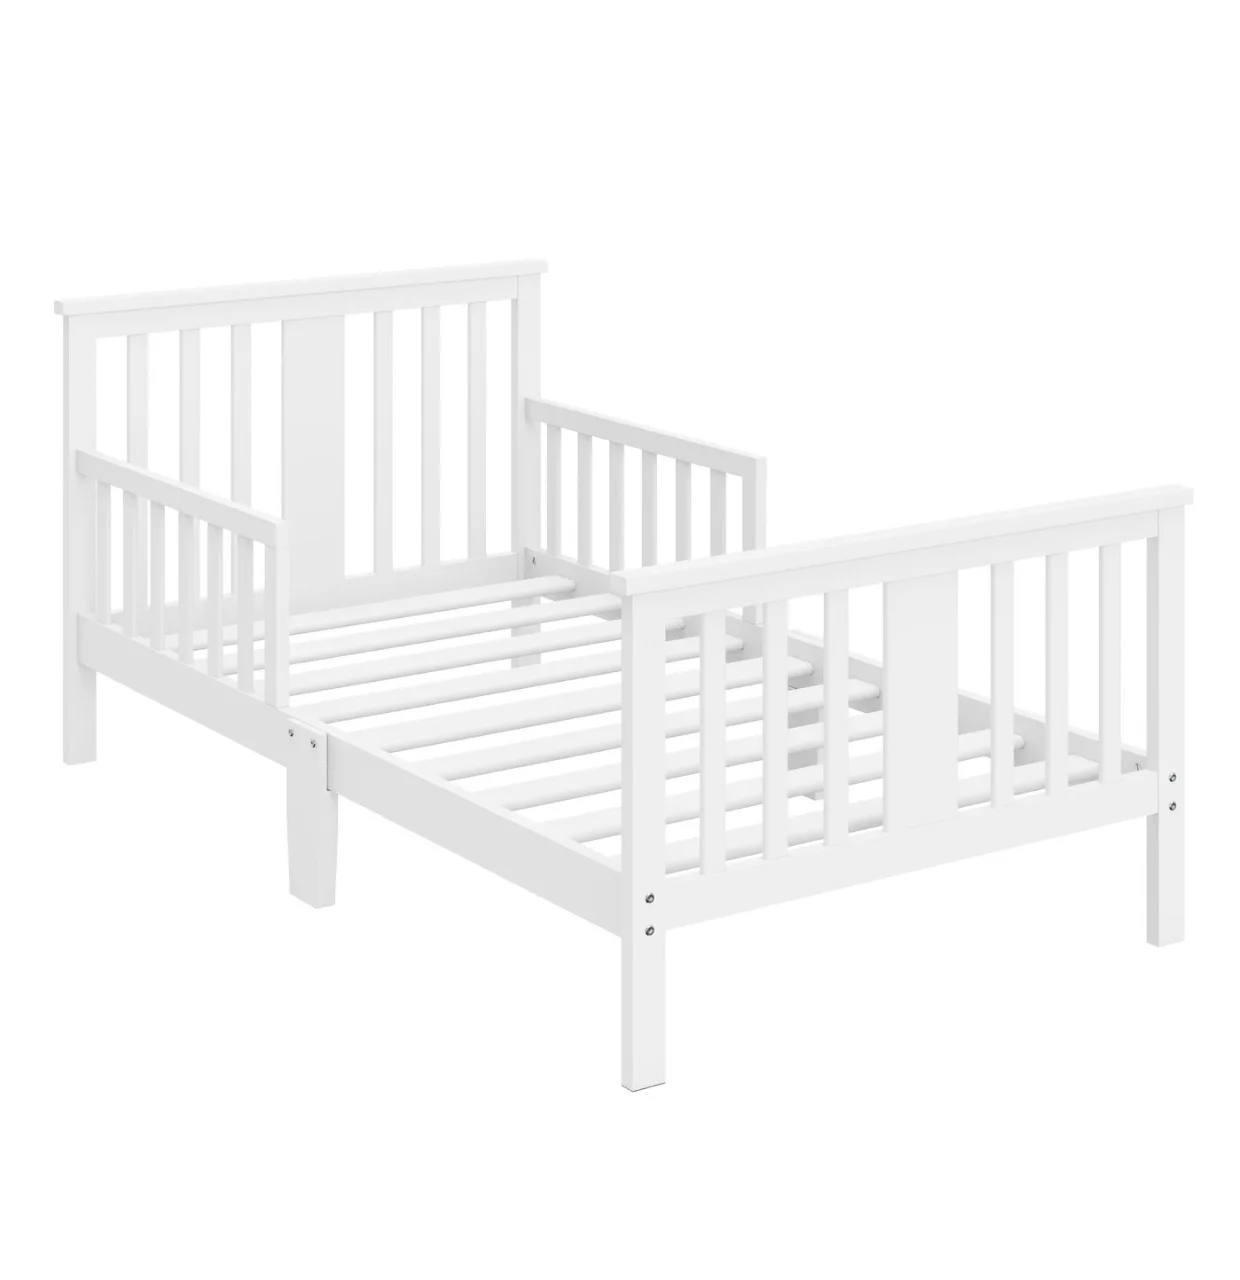 KA302 factory price Solid wood pine wood baby crib baby cot